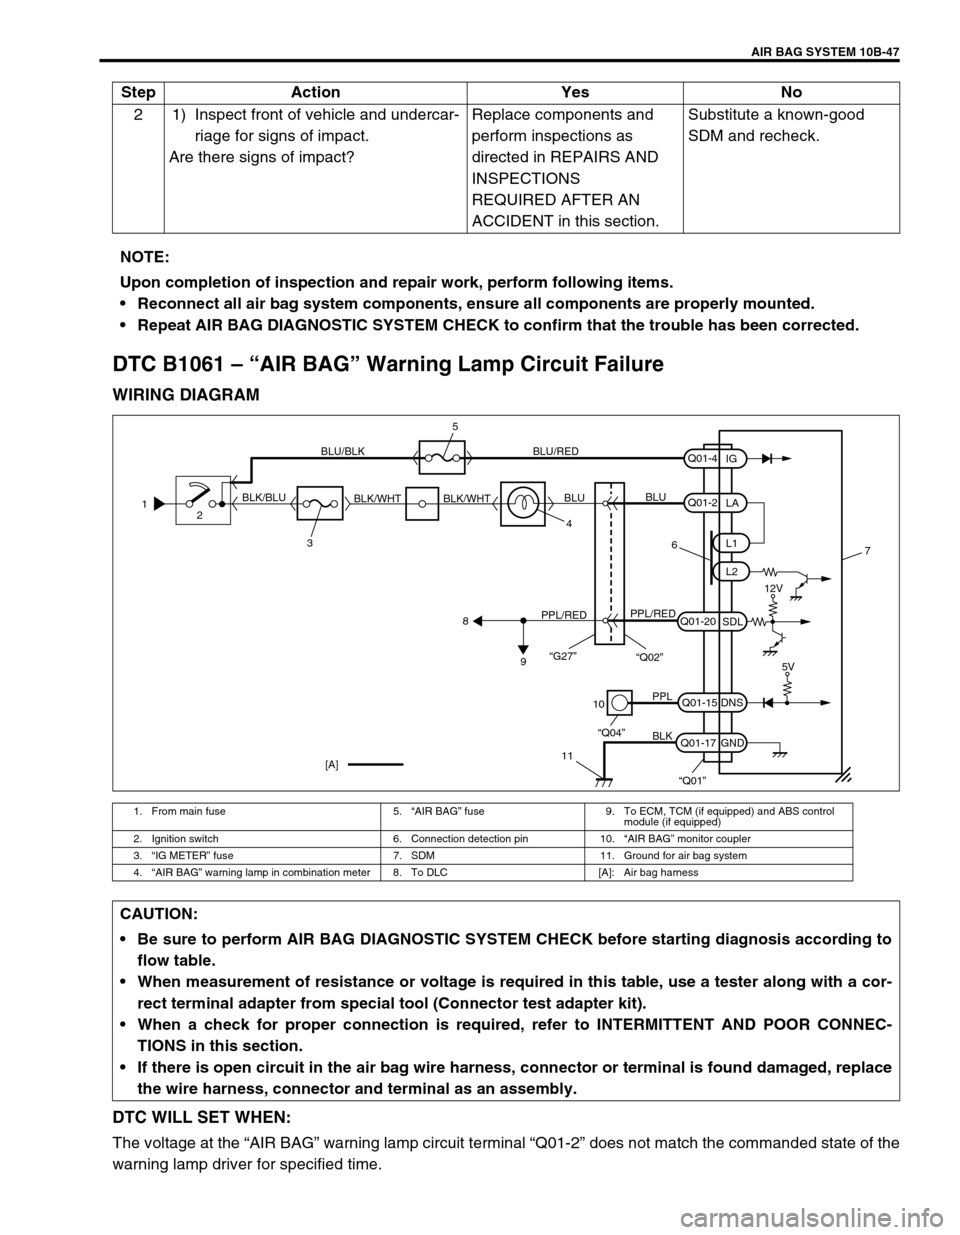 SUZUKI GRAND VITARA 1999 2.G Manual PDF AIR BAG SYSTEM 10B-47
DTC B1061 – “AIR BAG” Warning Lamp Circuit Failure
WIRING DIAGRAM
DTC WILL SET WHEN:
The voltage at the “AIR BAG” warning lamp circuit terminal “Q01-2” does not mat